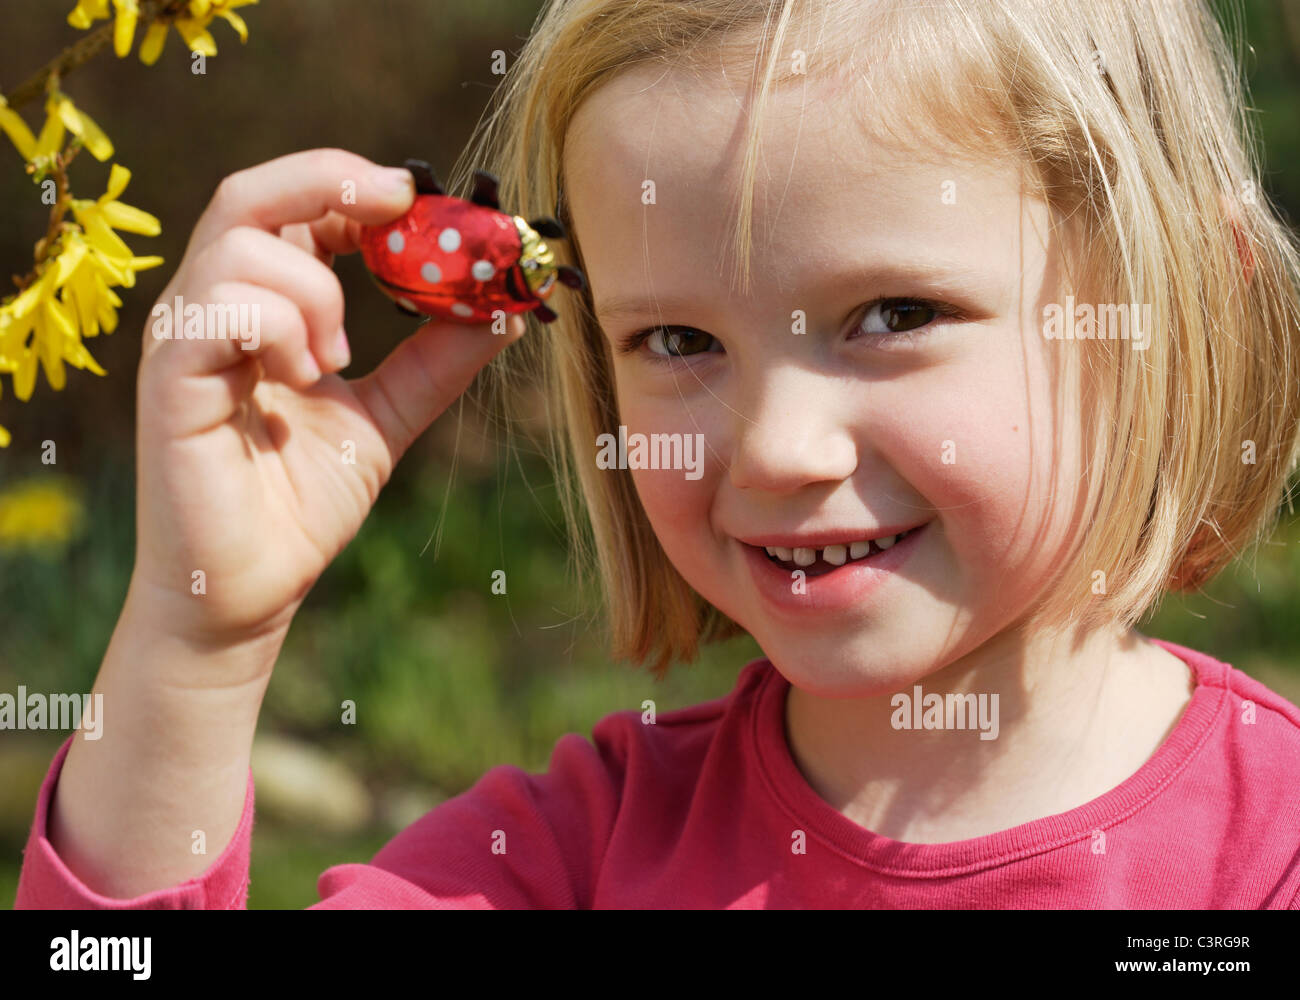 Deutschland, Bayern, Mädchen (6-7 Jahre) hält Ostern Schokolade Käfer, Porträt, Lächeln Stockfoto